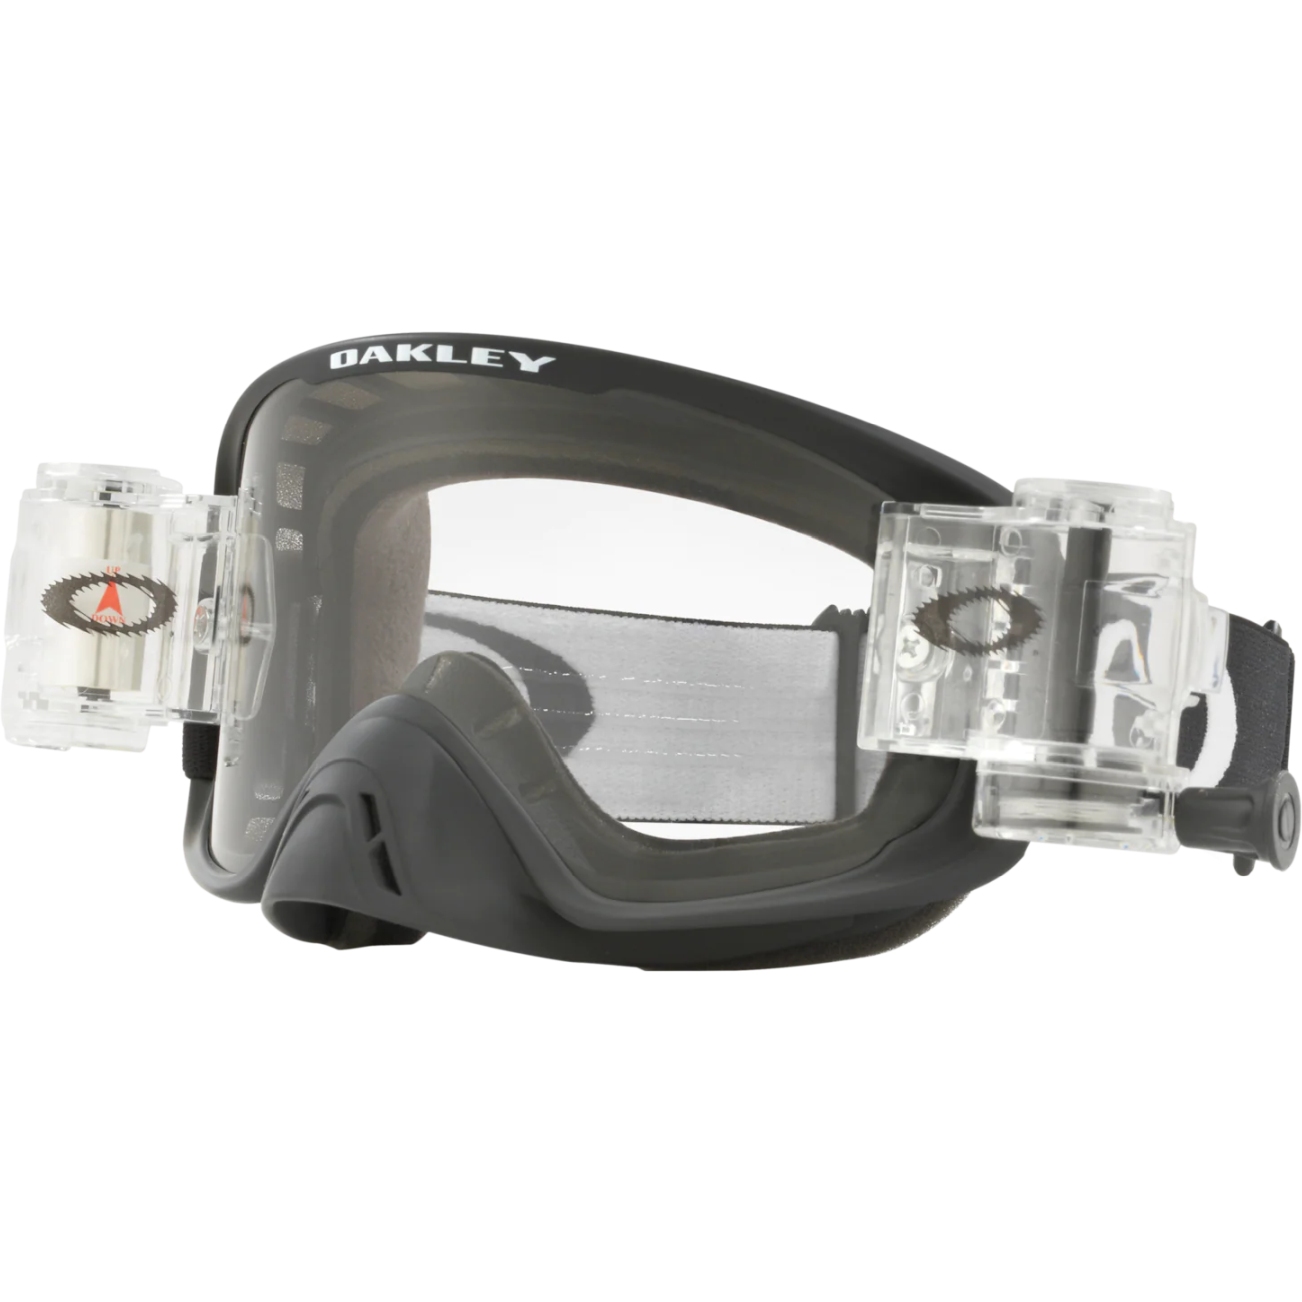 Produktbild von Oakley O-Frame 2.0 PRO MX Goggles - Race Ready Matte Black/Clear - OO7115-03 mit Roll-Off System